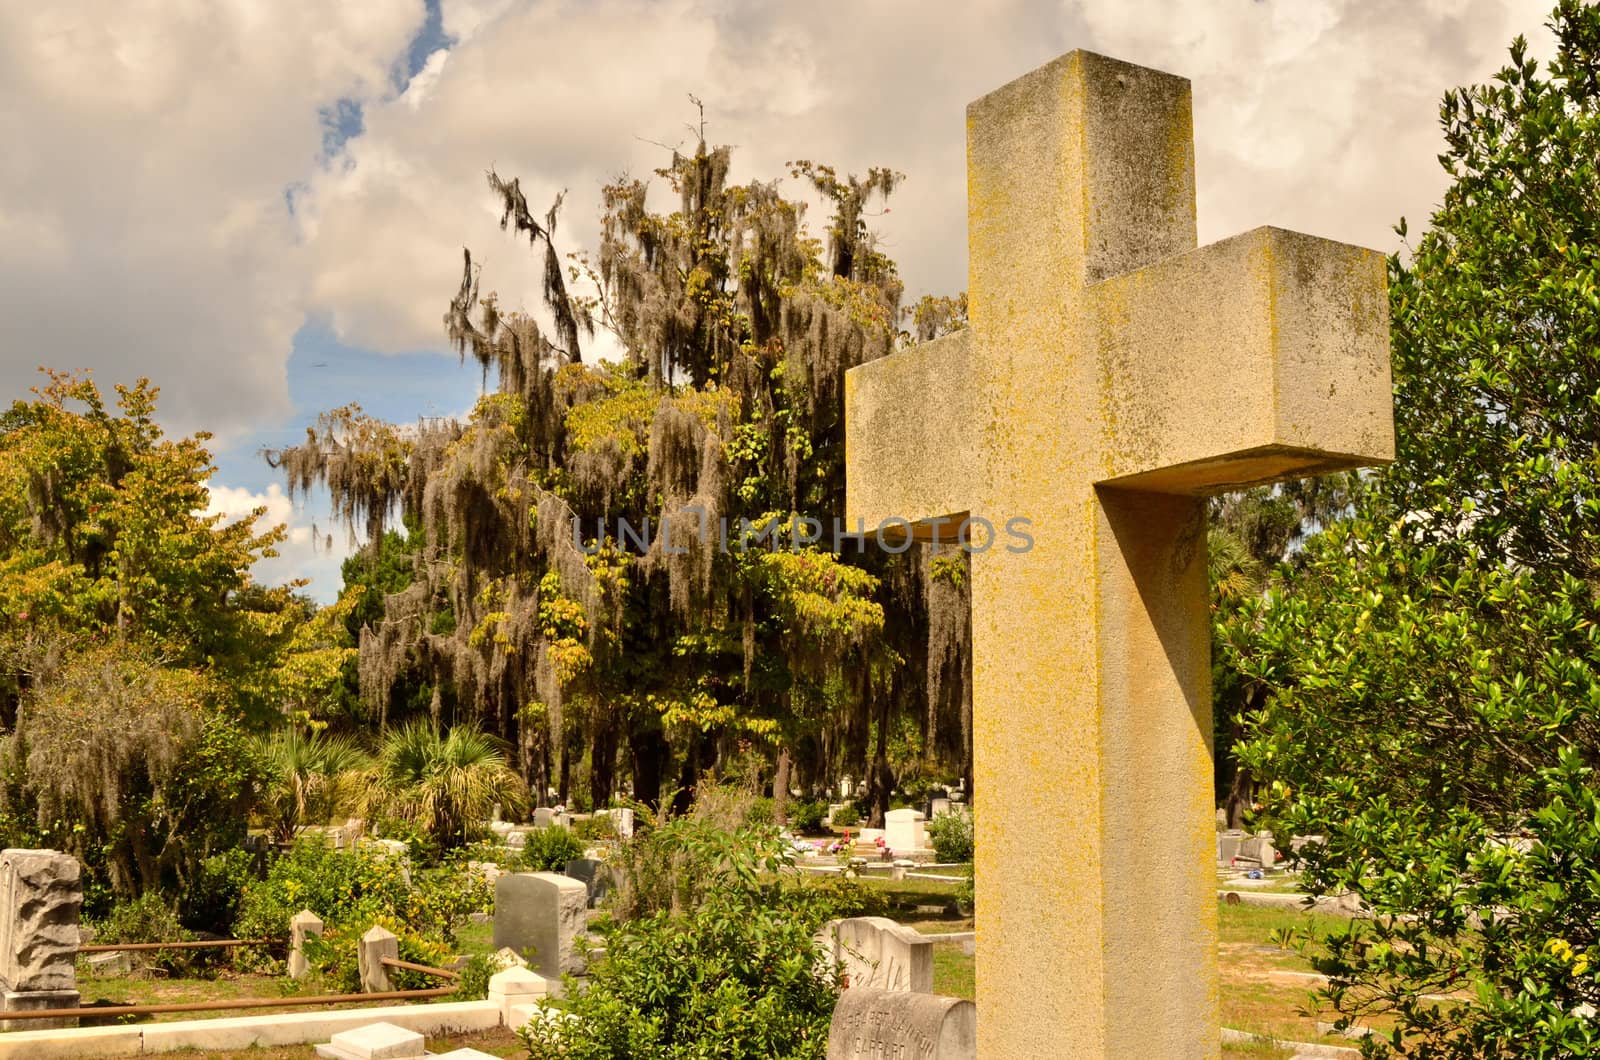 A cross memorial stands out at Bonaventure Cemetery in Savannah Georgia